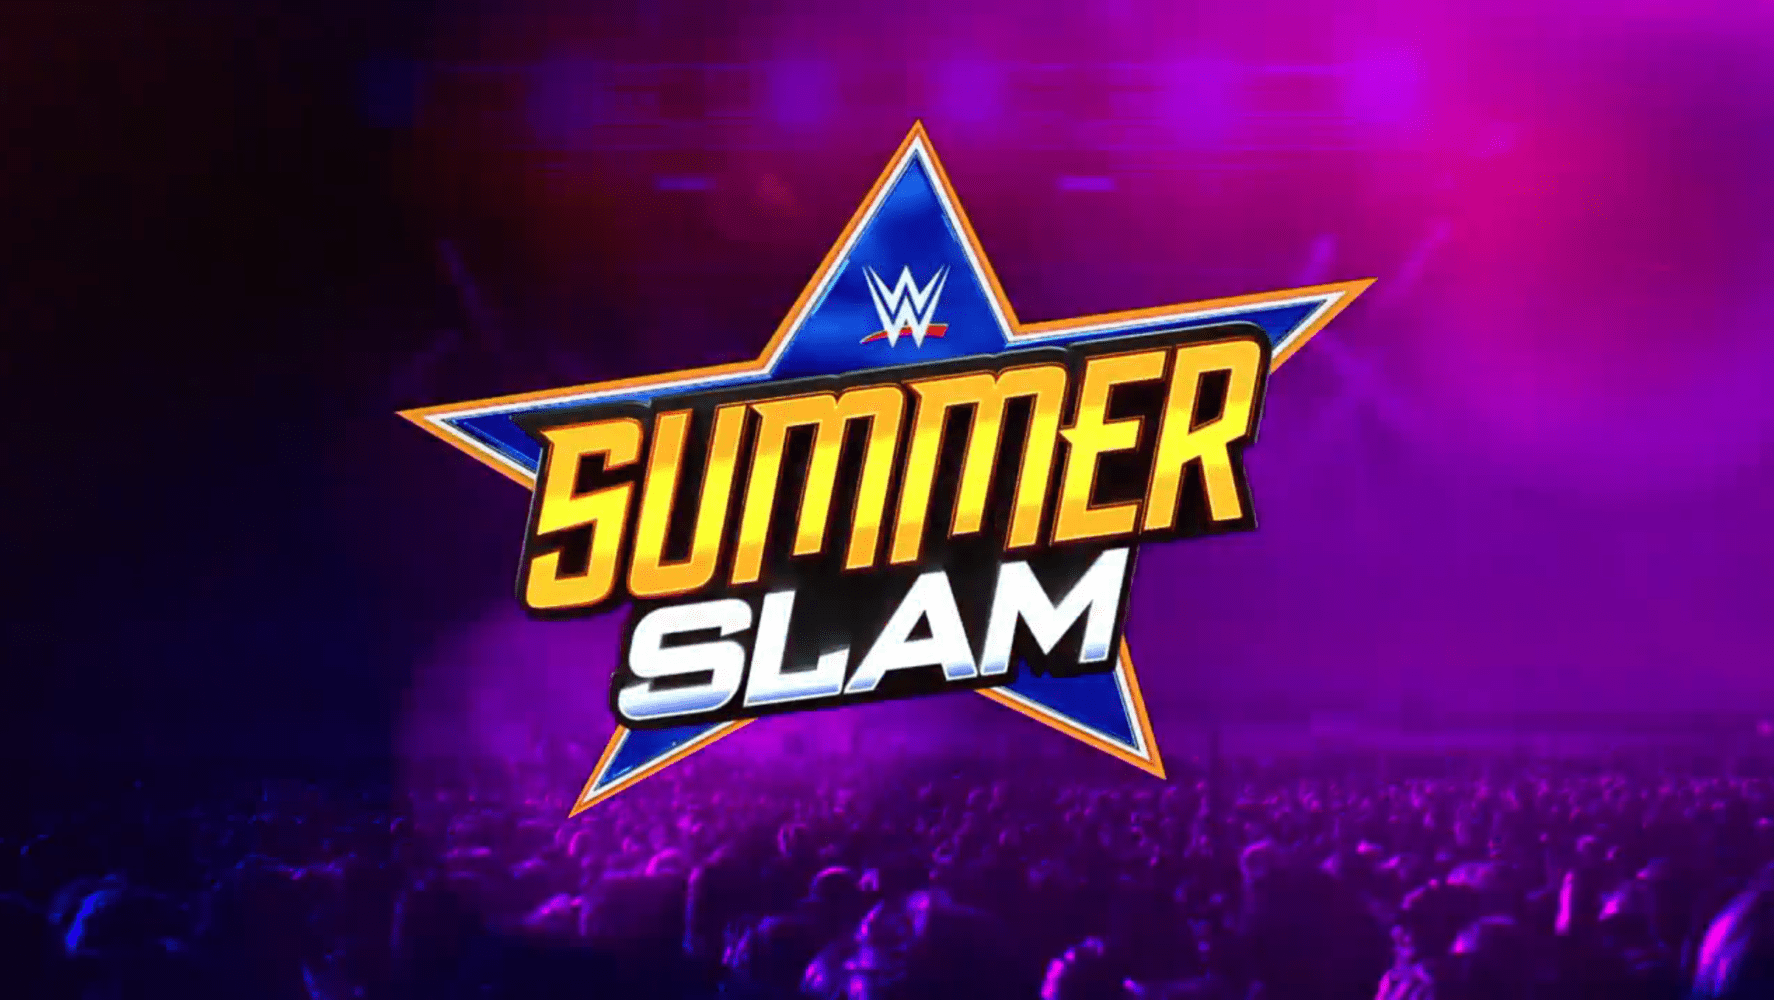 WWE Announces Title Match for SummerSlam